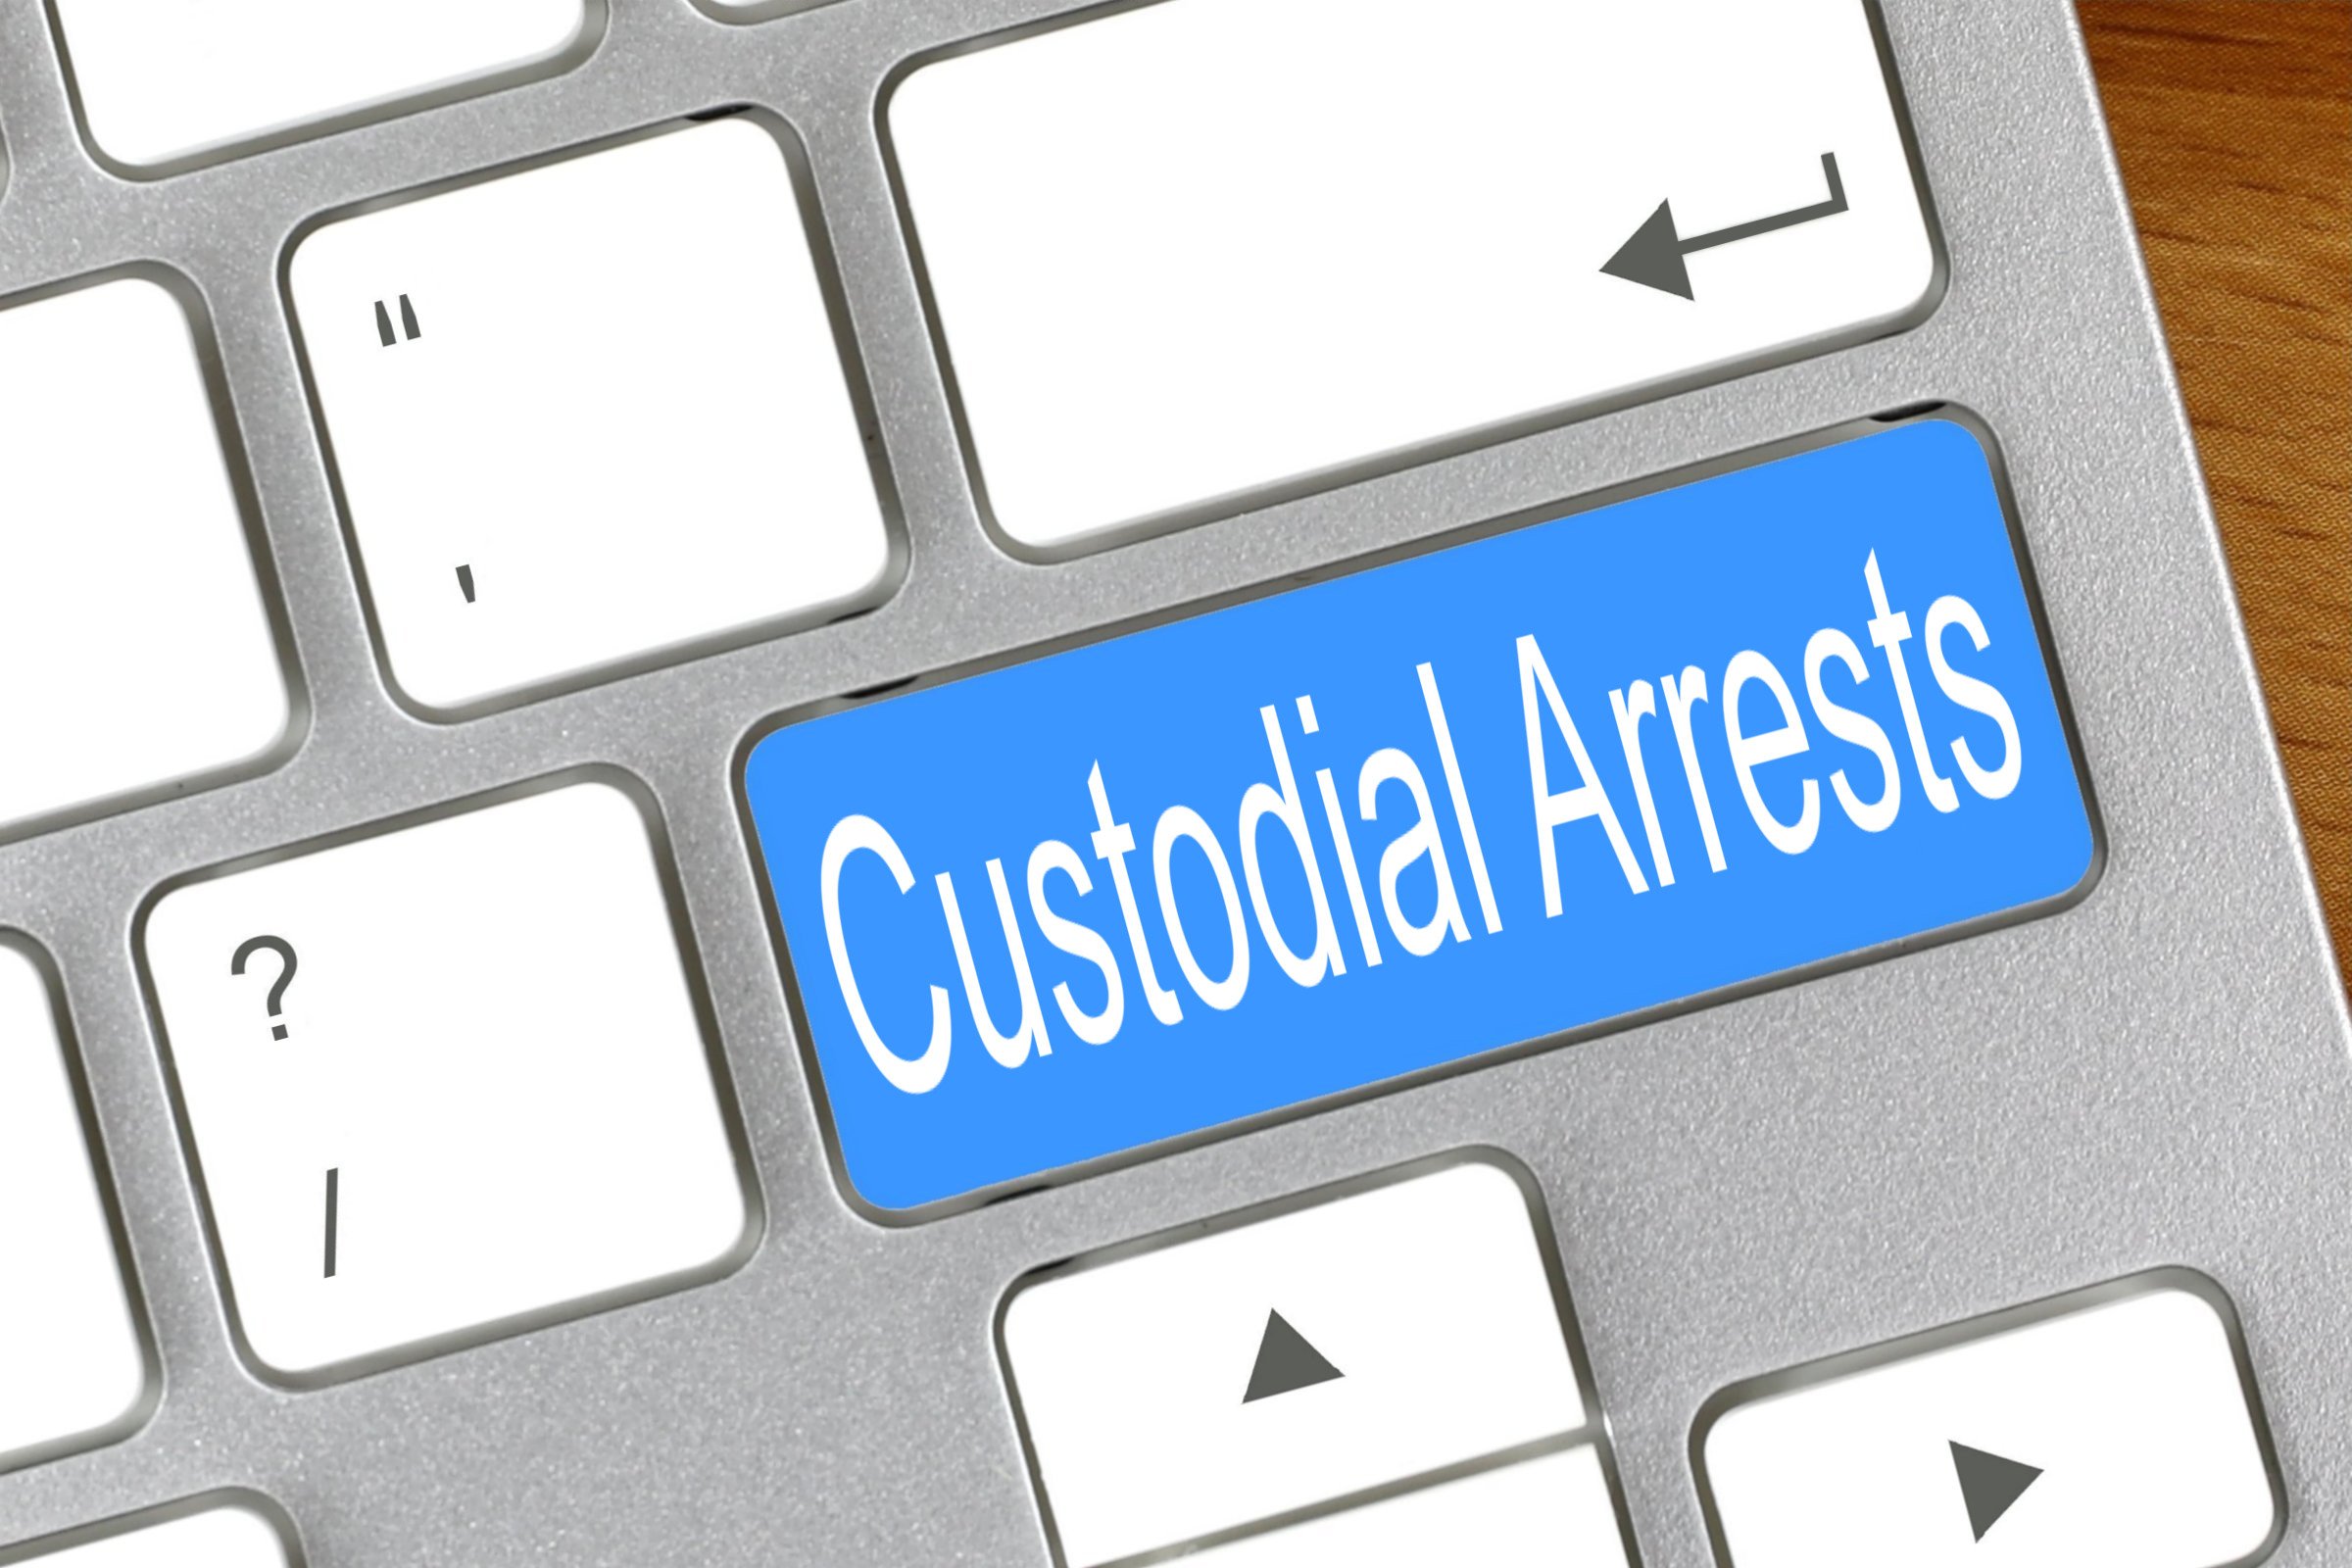 custodial arrests